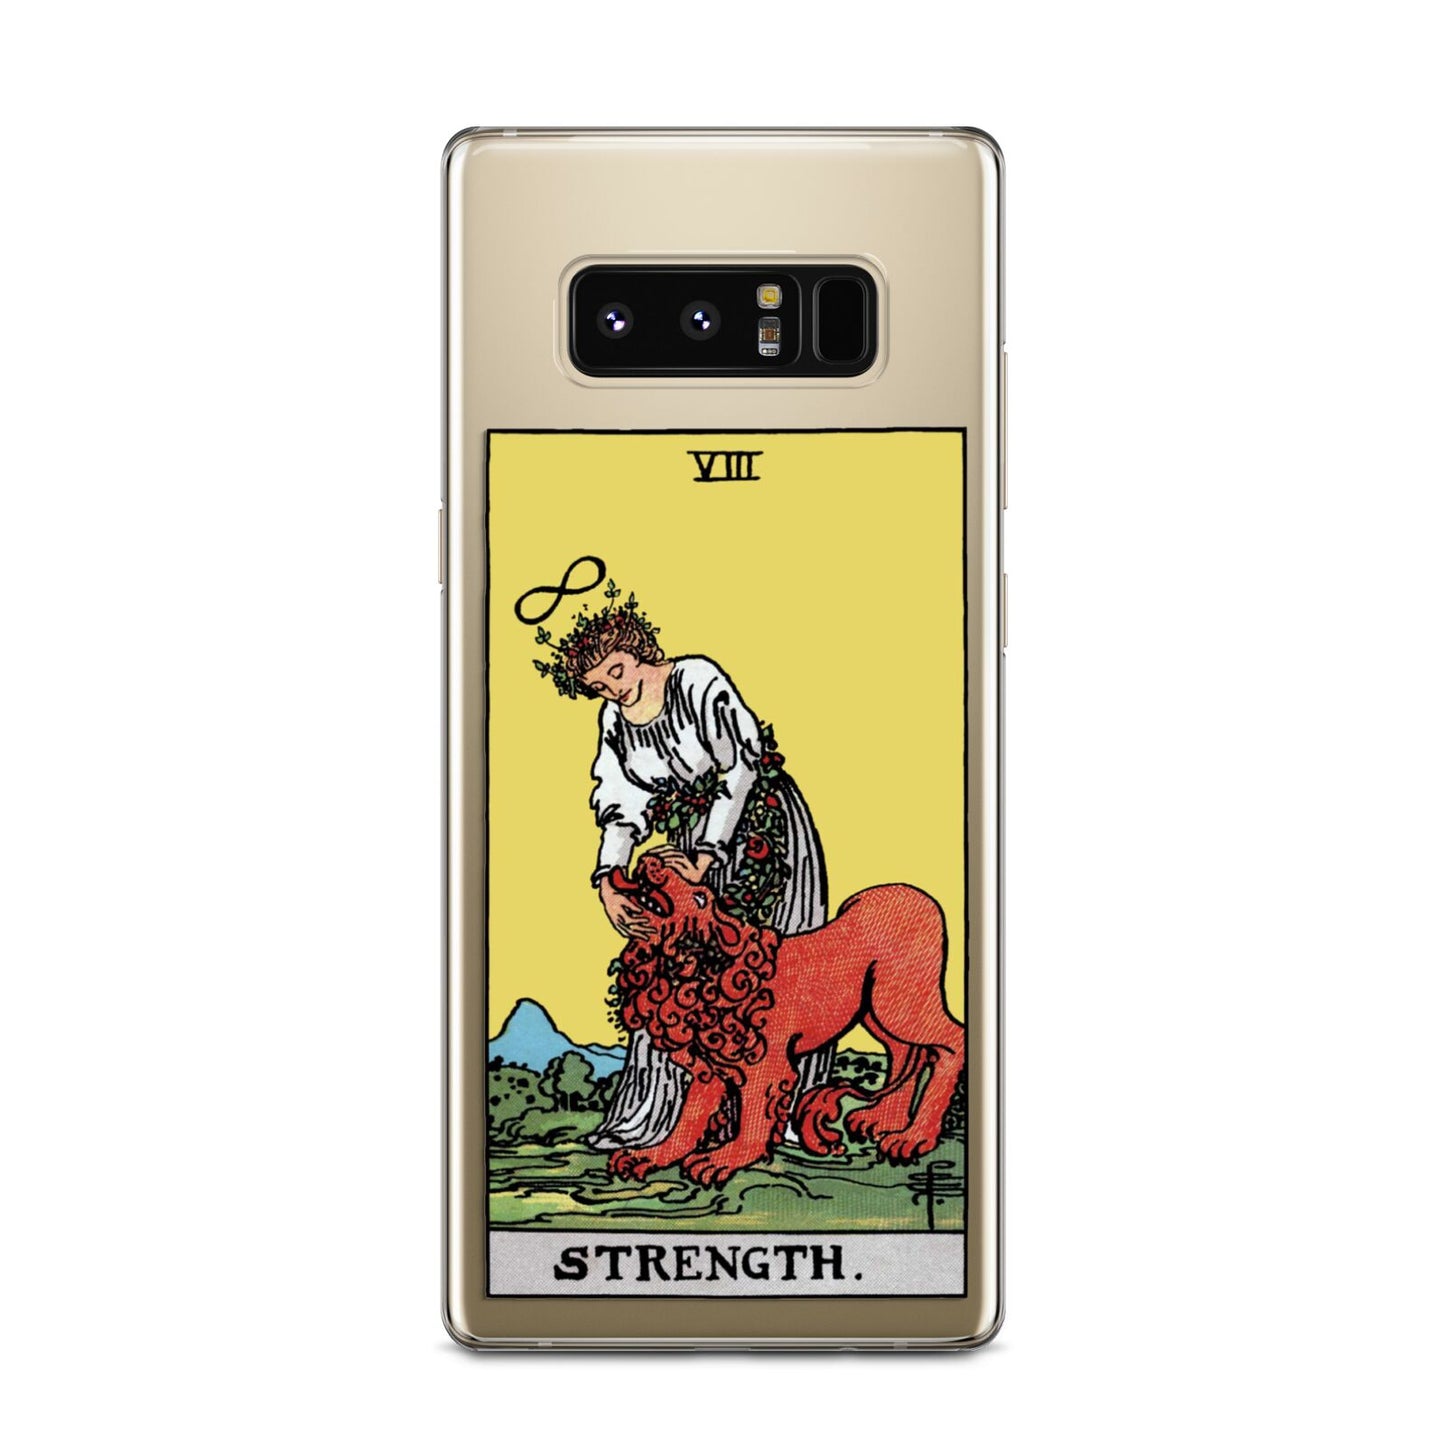 Strength Tarot Card Samsung Galaxy Note 8 Case